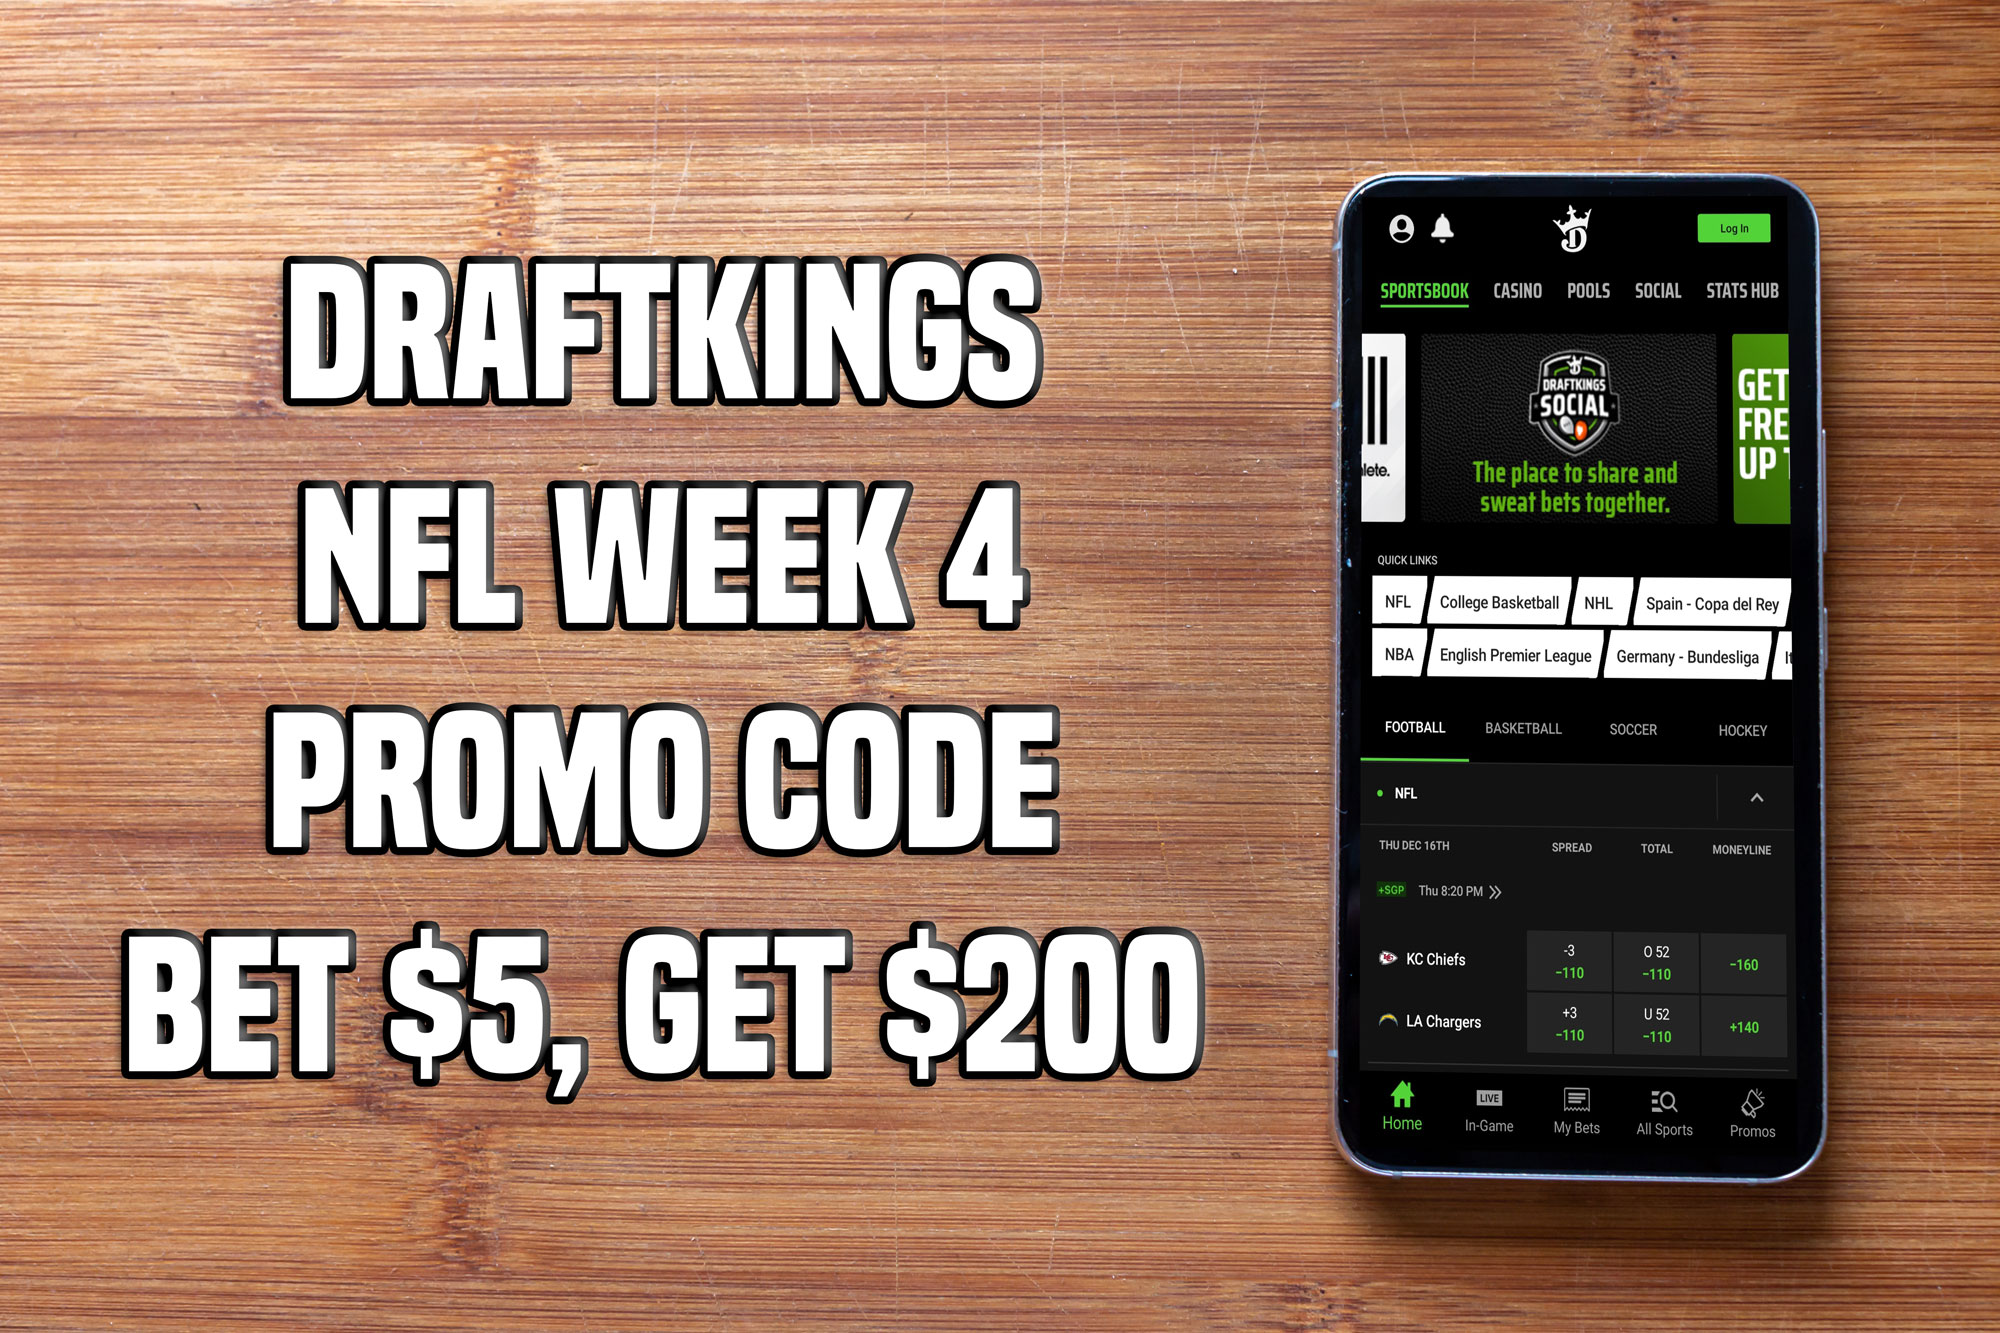 DraftKings promo code: NFL Week 4 arrives with bet $5, get $200